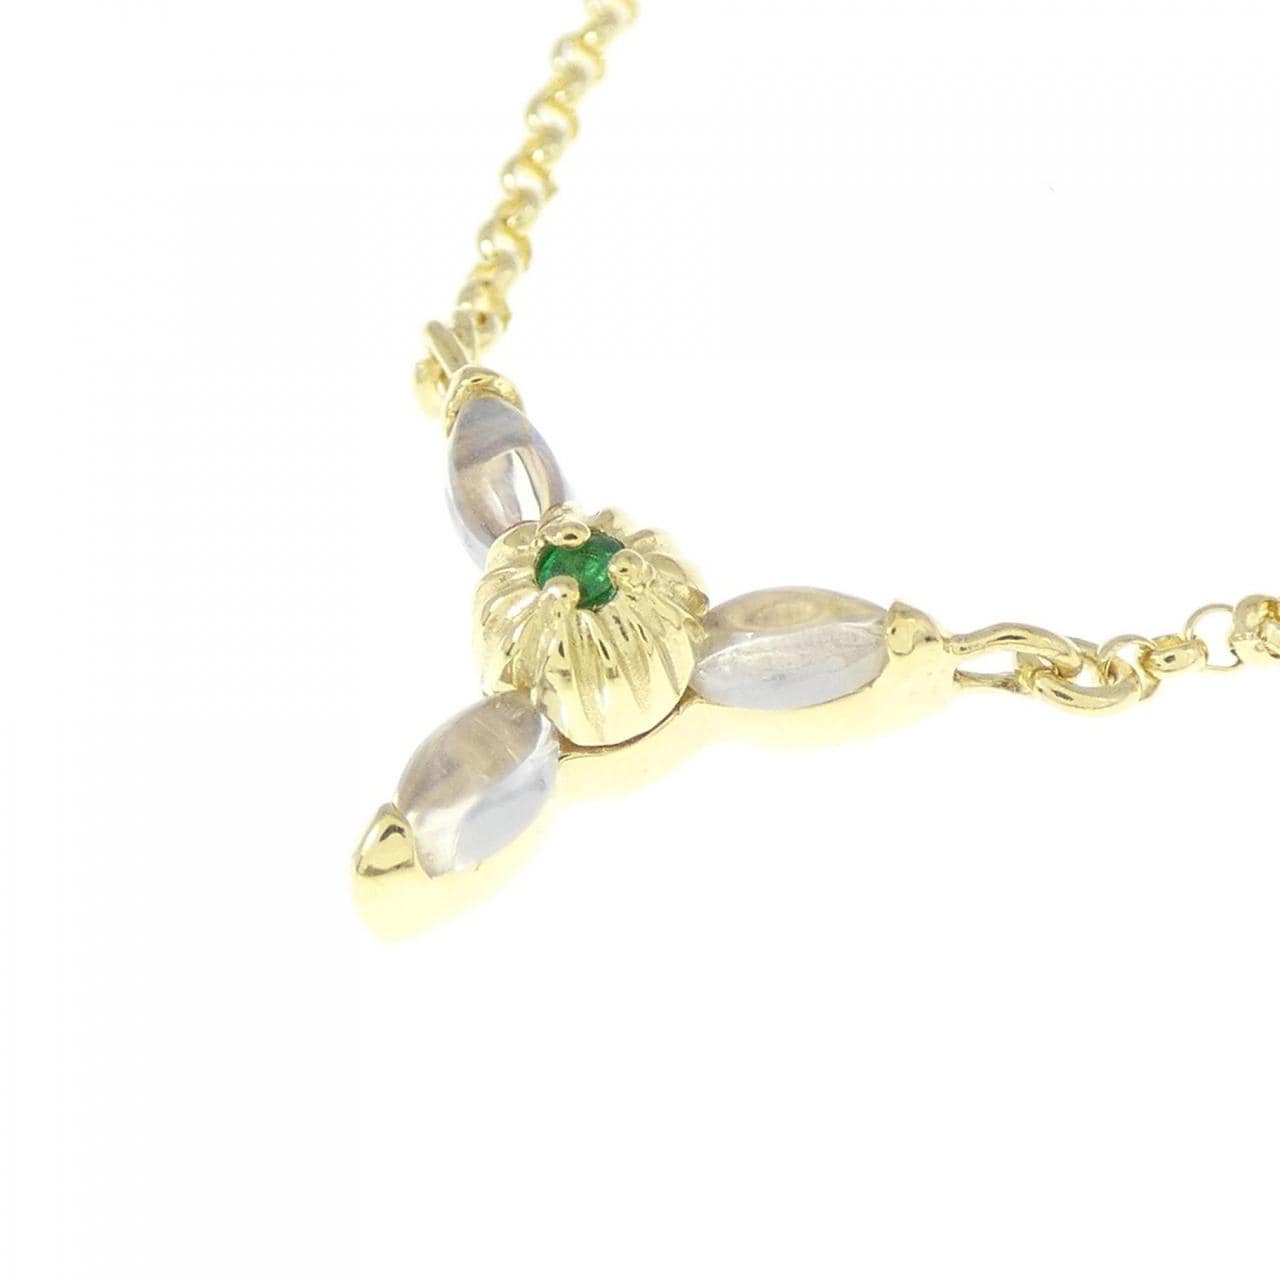 K18YG emerald necklace